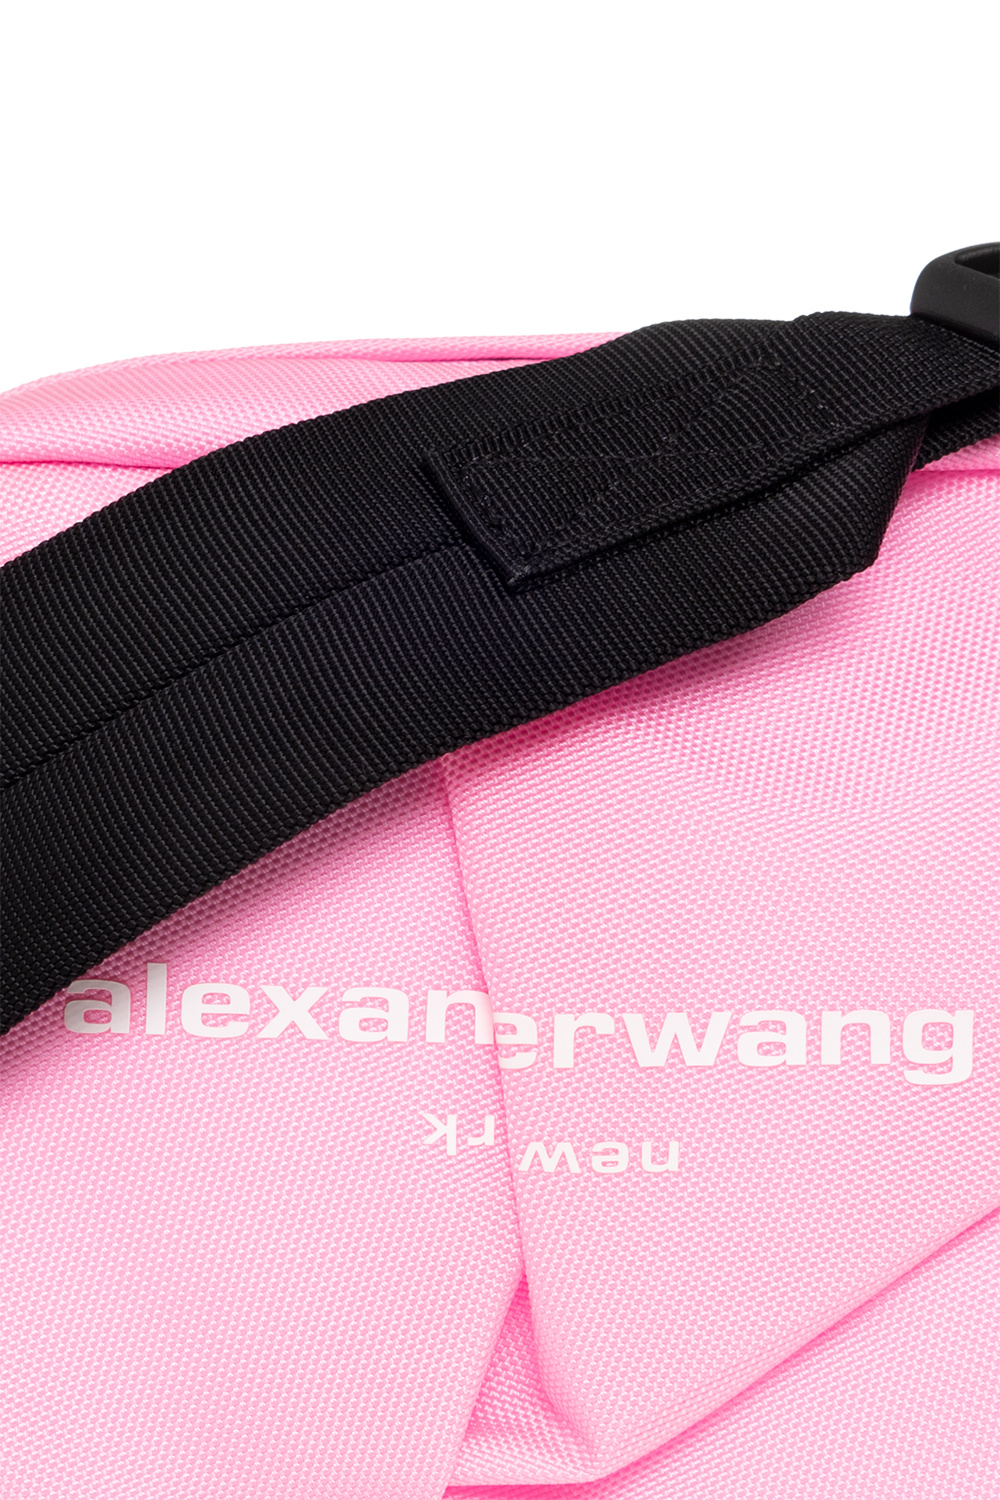 Alexander Wang k ikonik Small Bucket Bag